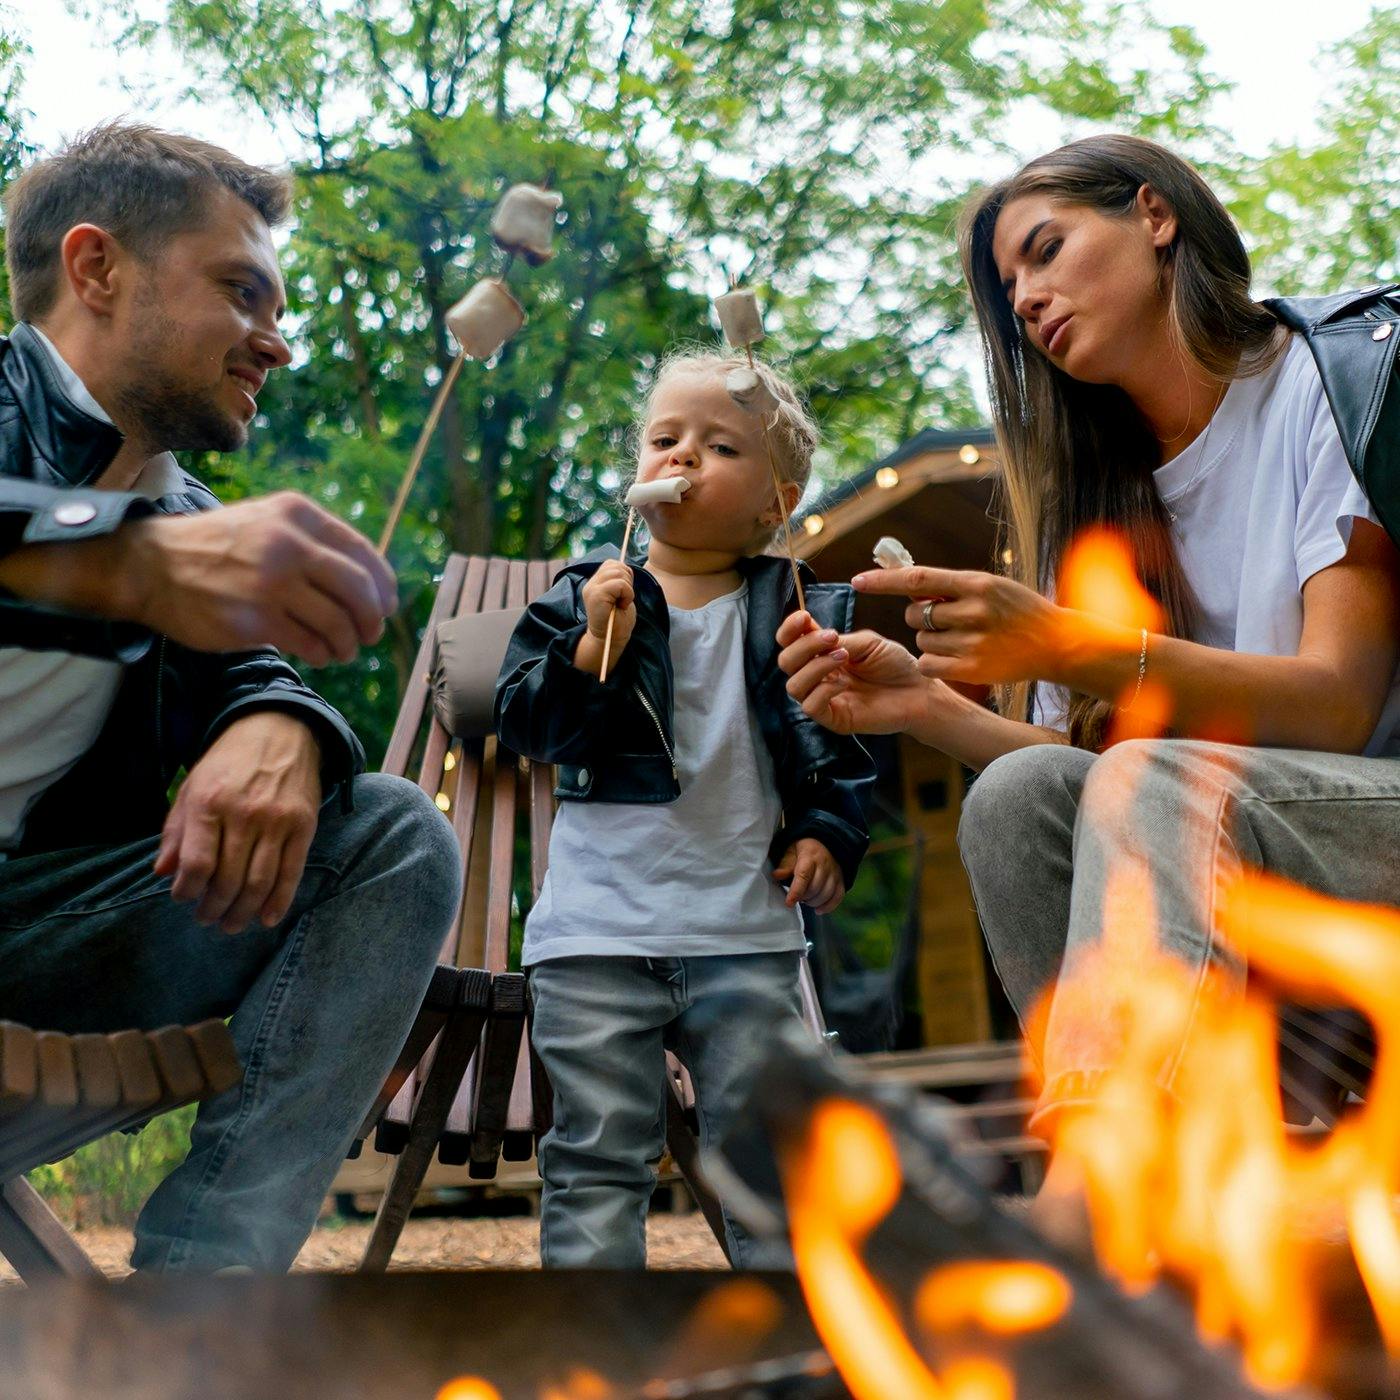 A family roasting marshmallows around a bonfire